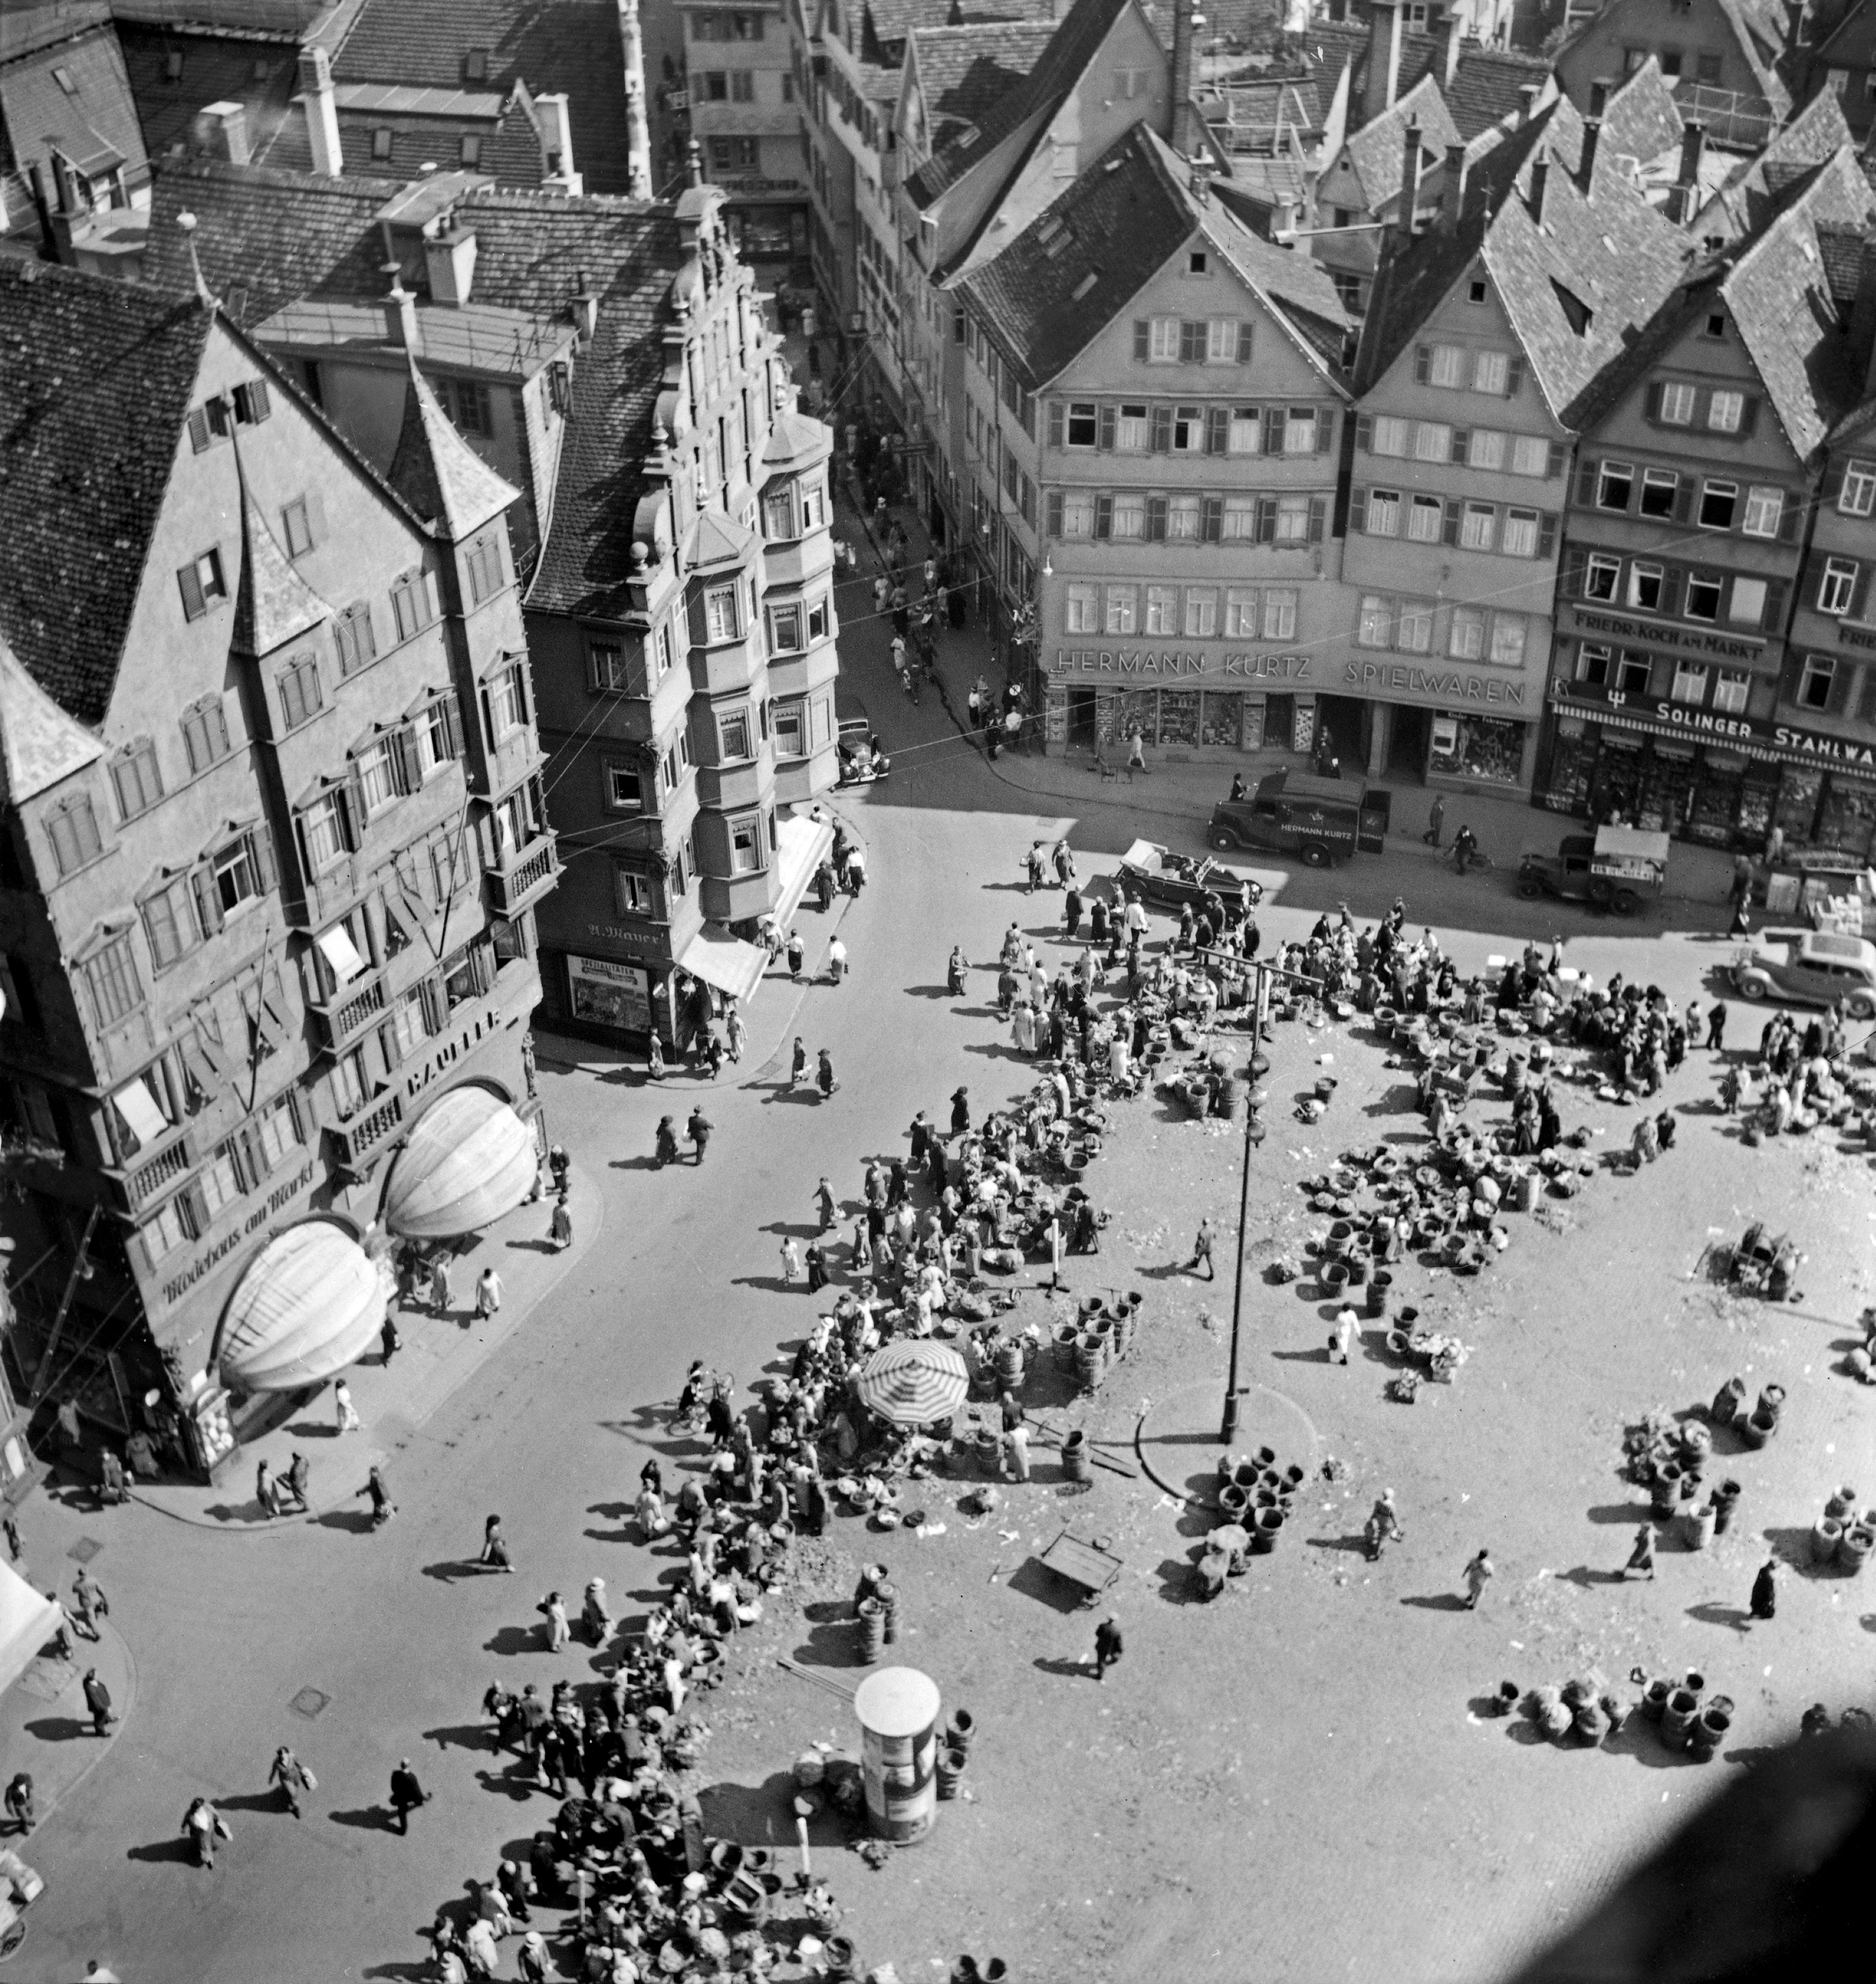 Karl Heinrich Lämmel Black and White Photograph - View from belfry of Stuttgart city hall, Stuttgart Germany 1935, Printed Later